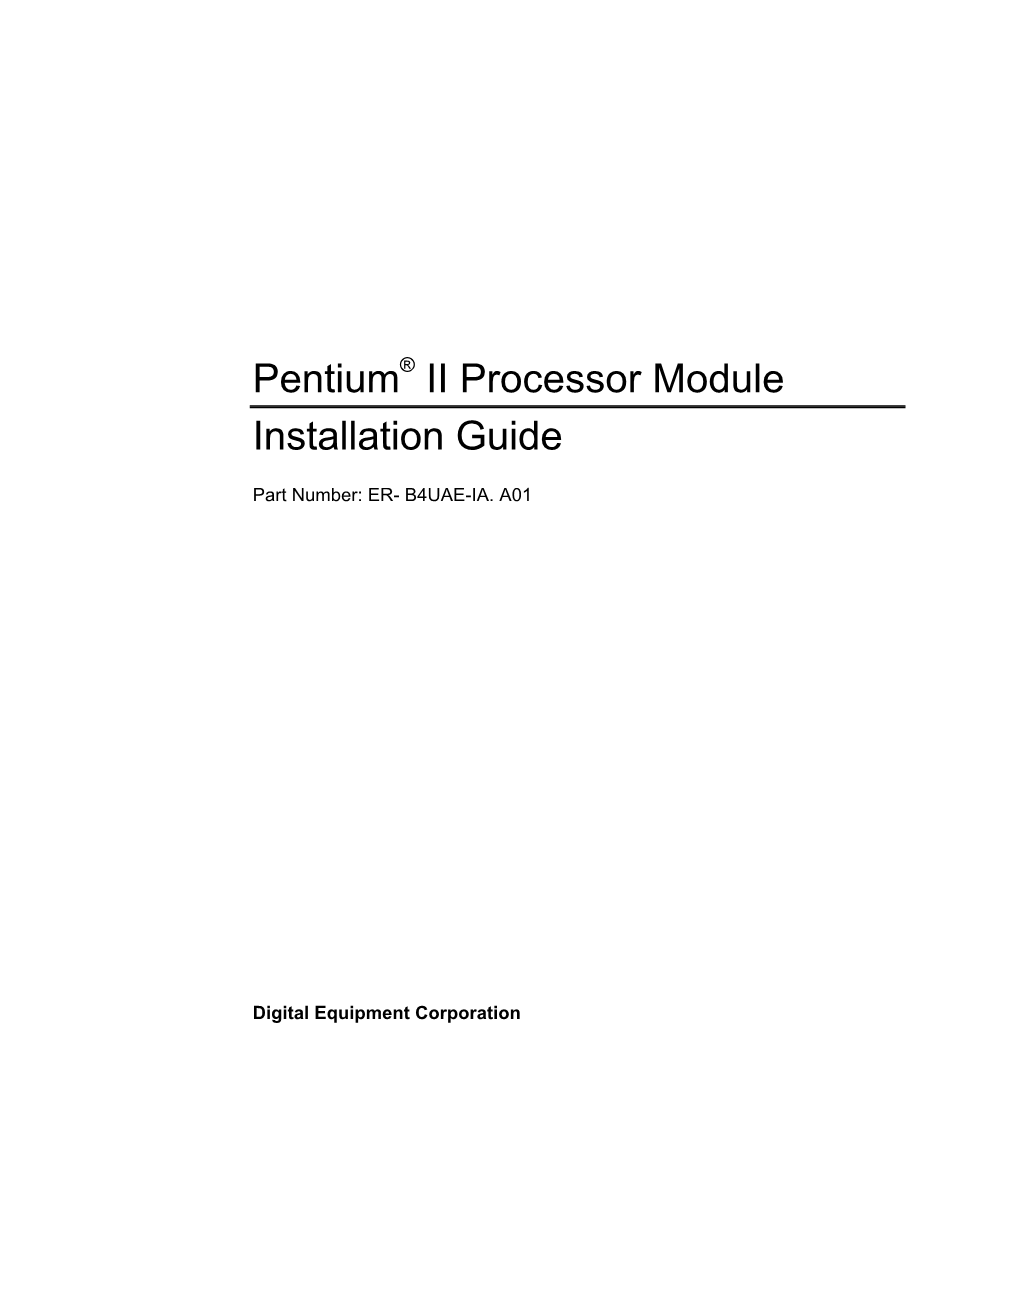 Pentium ® II Processor Module Installation Guide